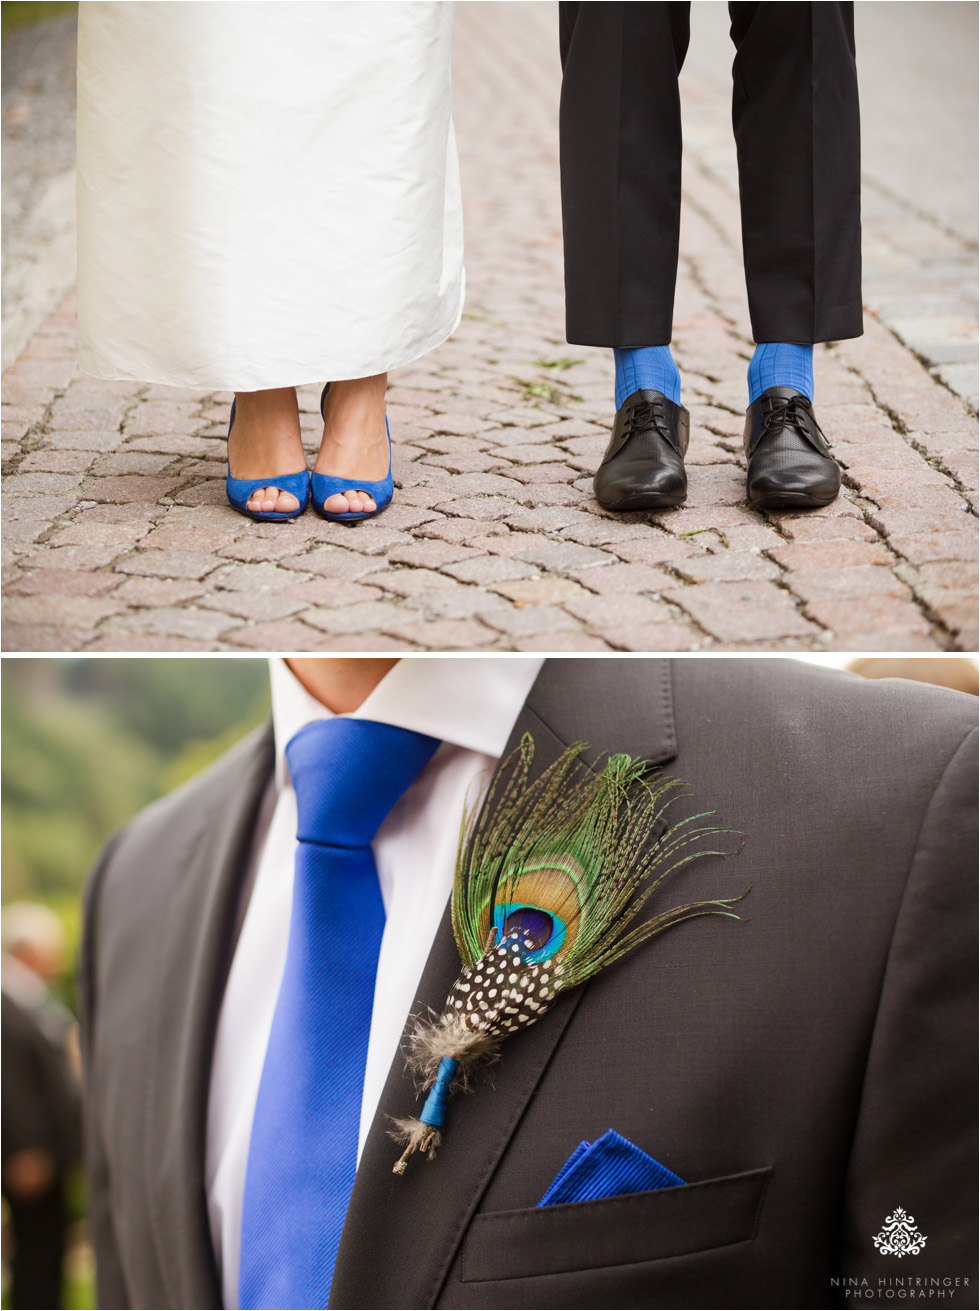 Peacock themed wedding | Maria & Toni | Congresspark Igls, Tyrol - Blog of Nina Hintringer Photography - Wedding Photography, Wedding Reportage and Destination Weddings